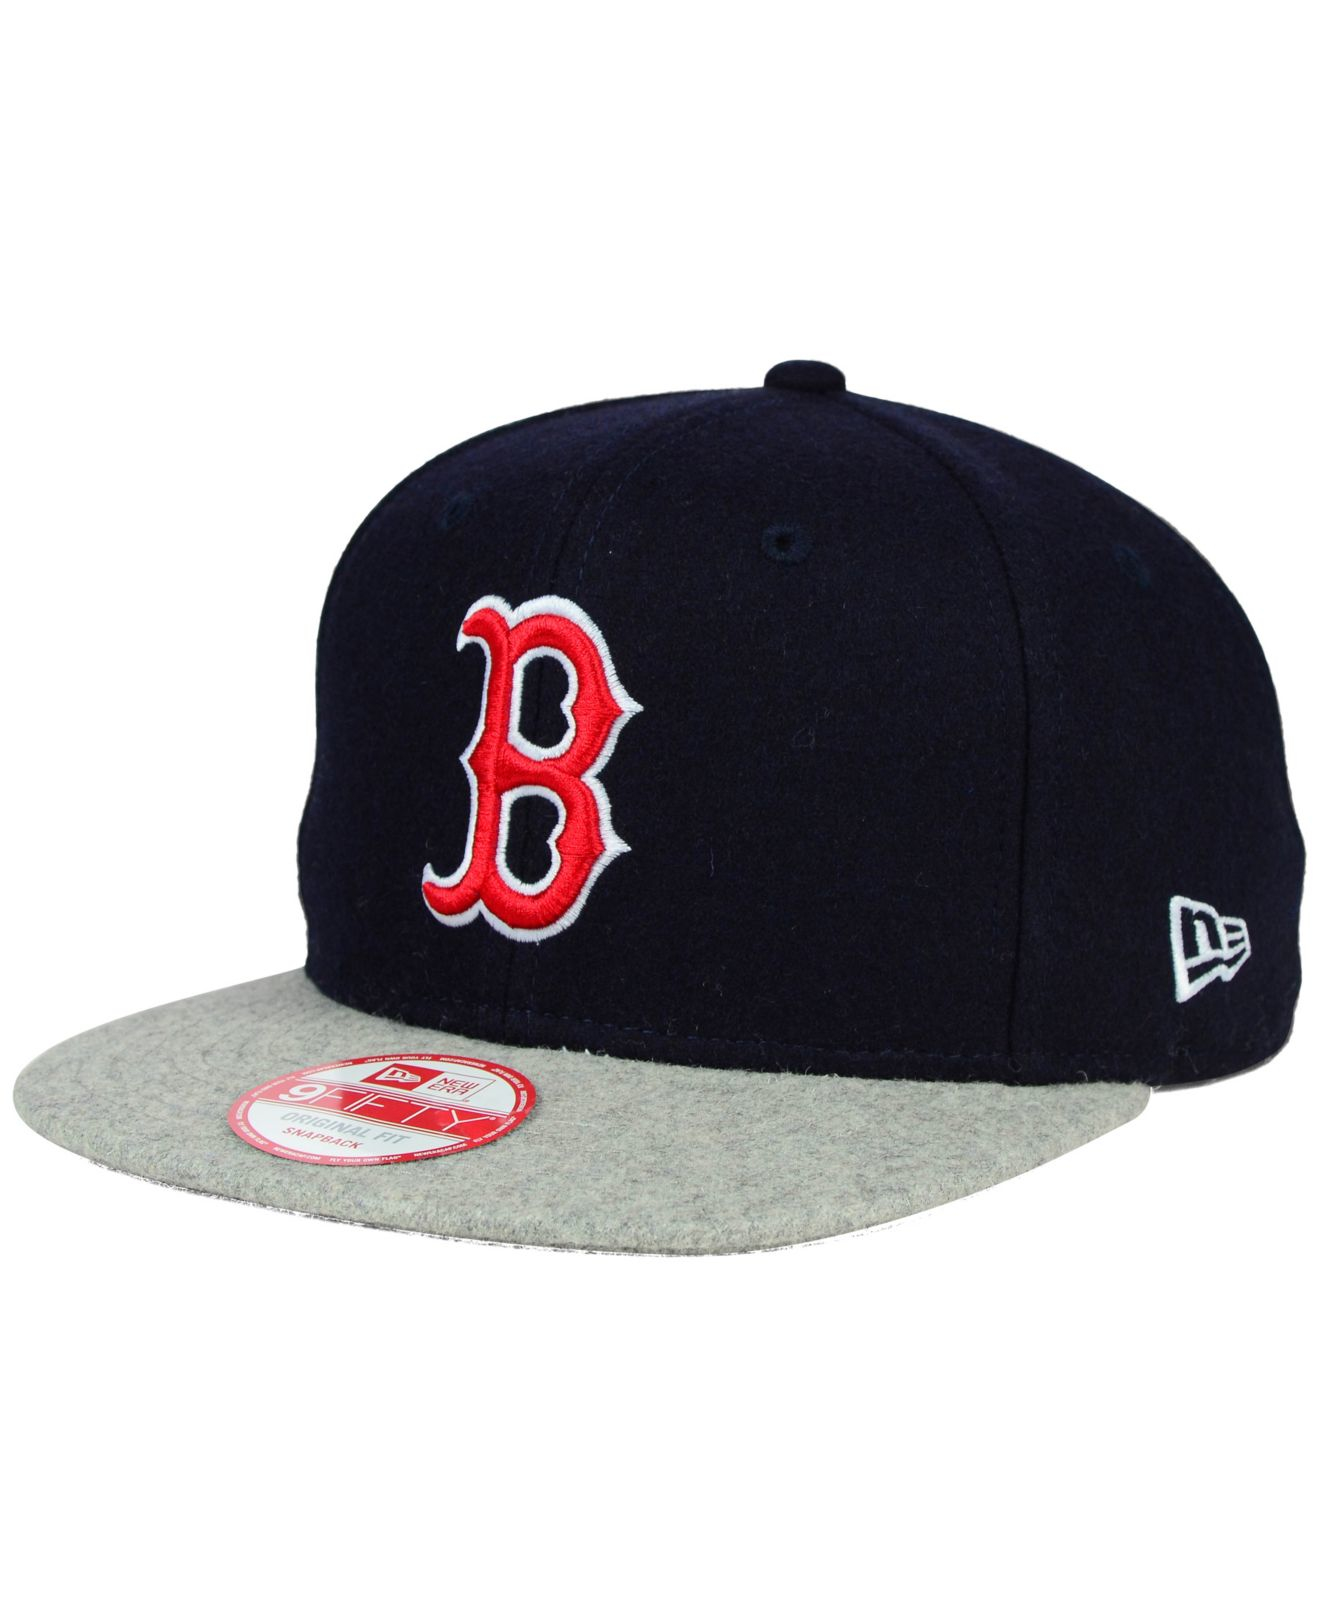 Lyst - KTZ Boston Red Sox Team Melton 9fifty Snapback Cap in Blue for Men